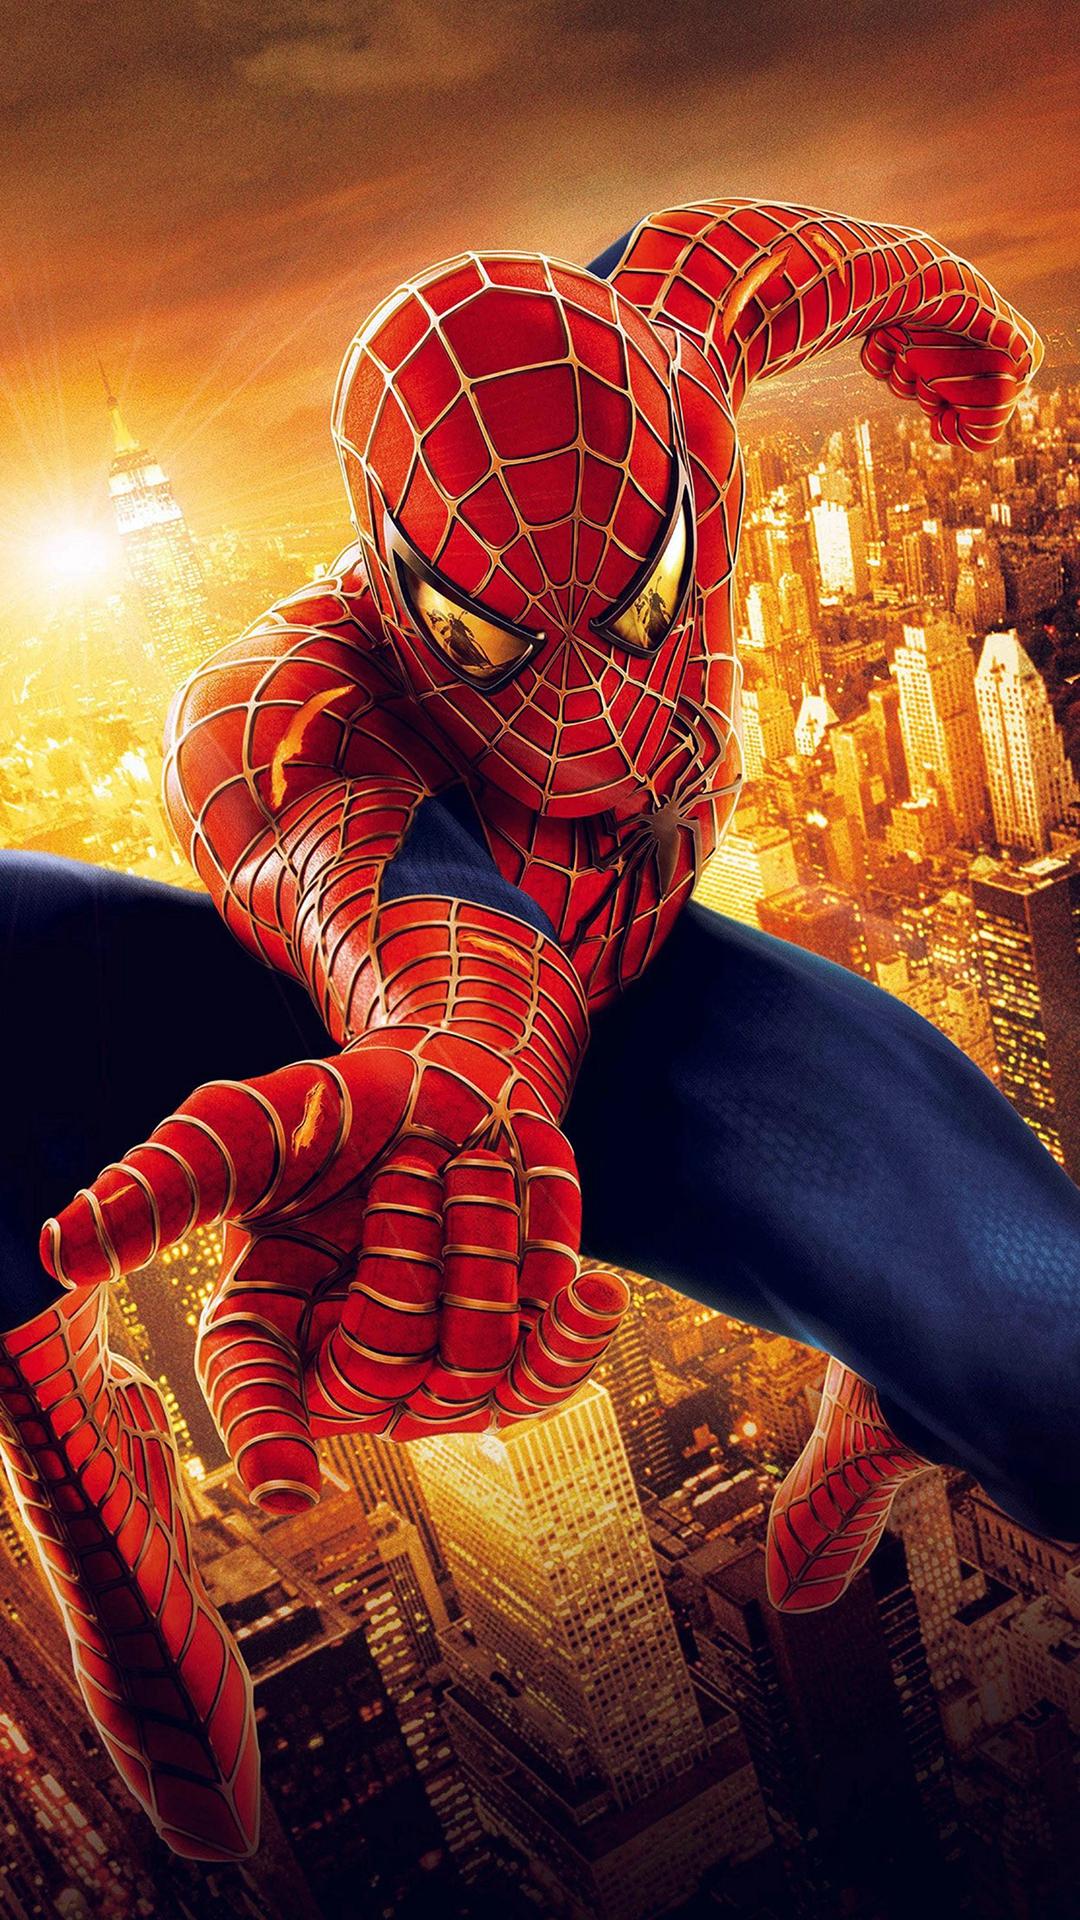 1080 x 1920 · jpeg - Free Download Spiderman Backgrounds for Iphone | PixelsTalk